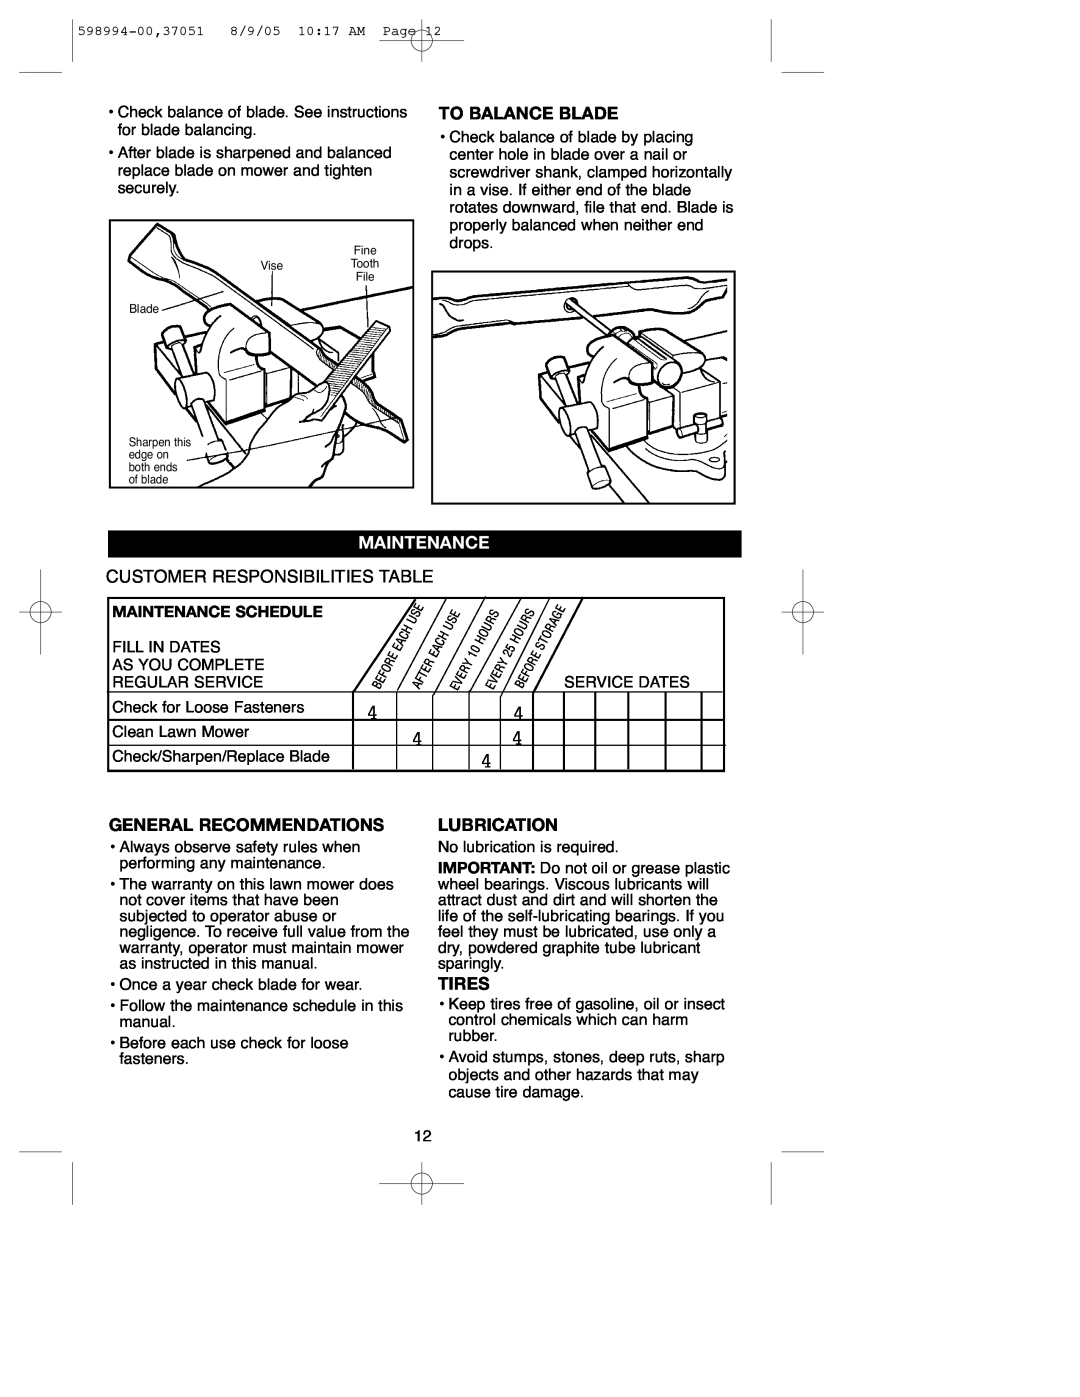 DeWalt 900.37051 instruction manual General Recommendations, Lubrication, Tires, Maintenance Schedule 